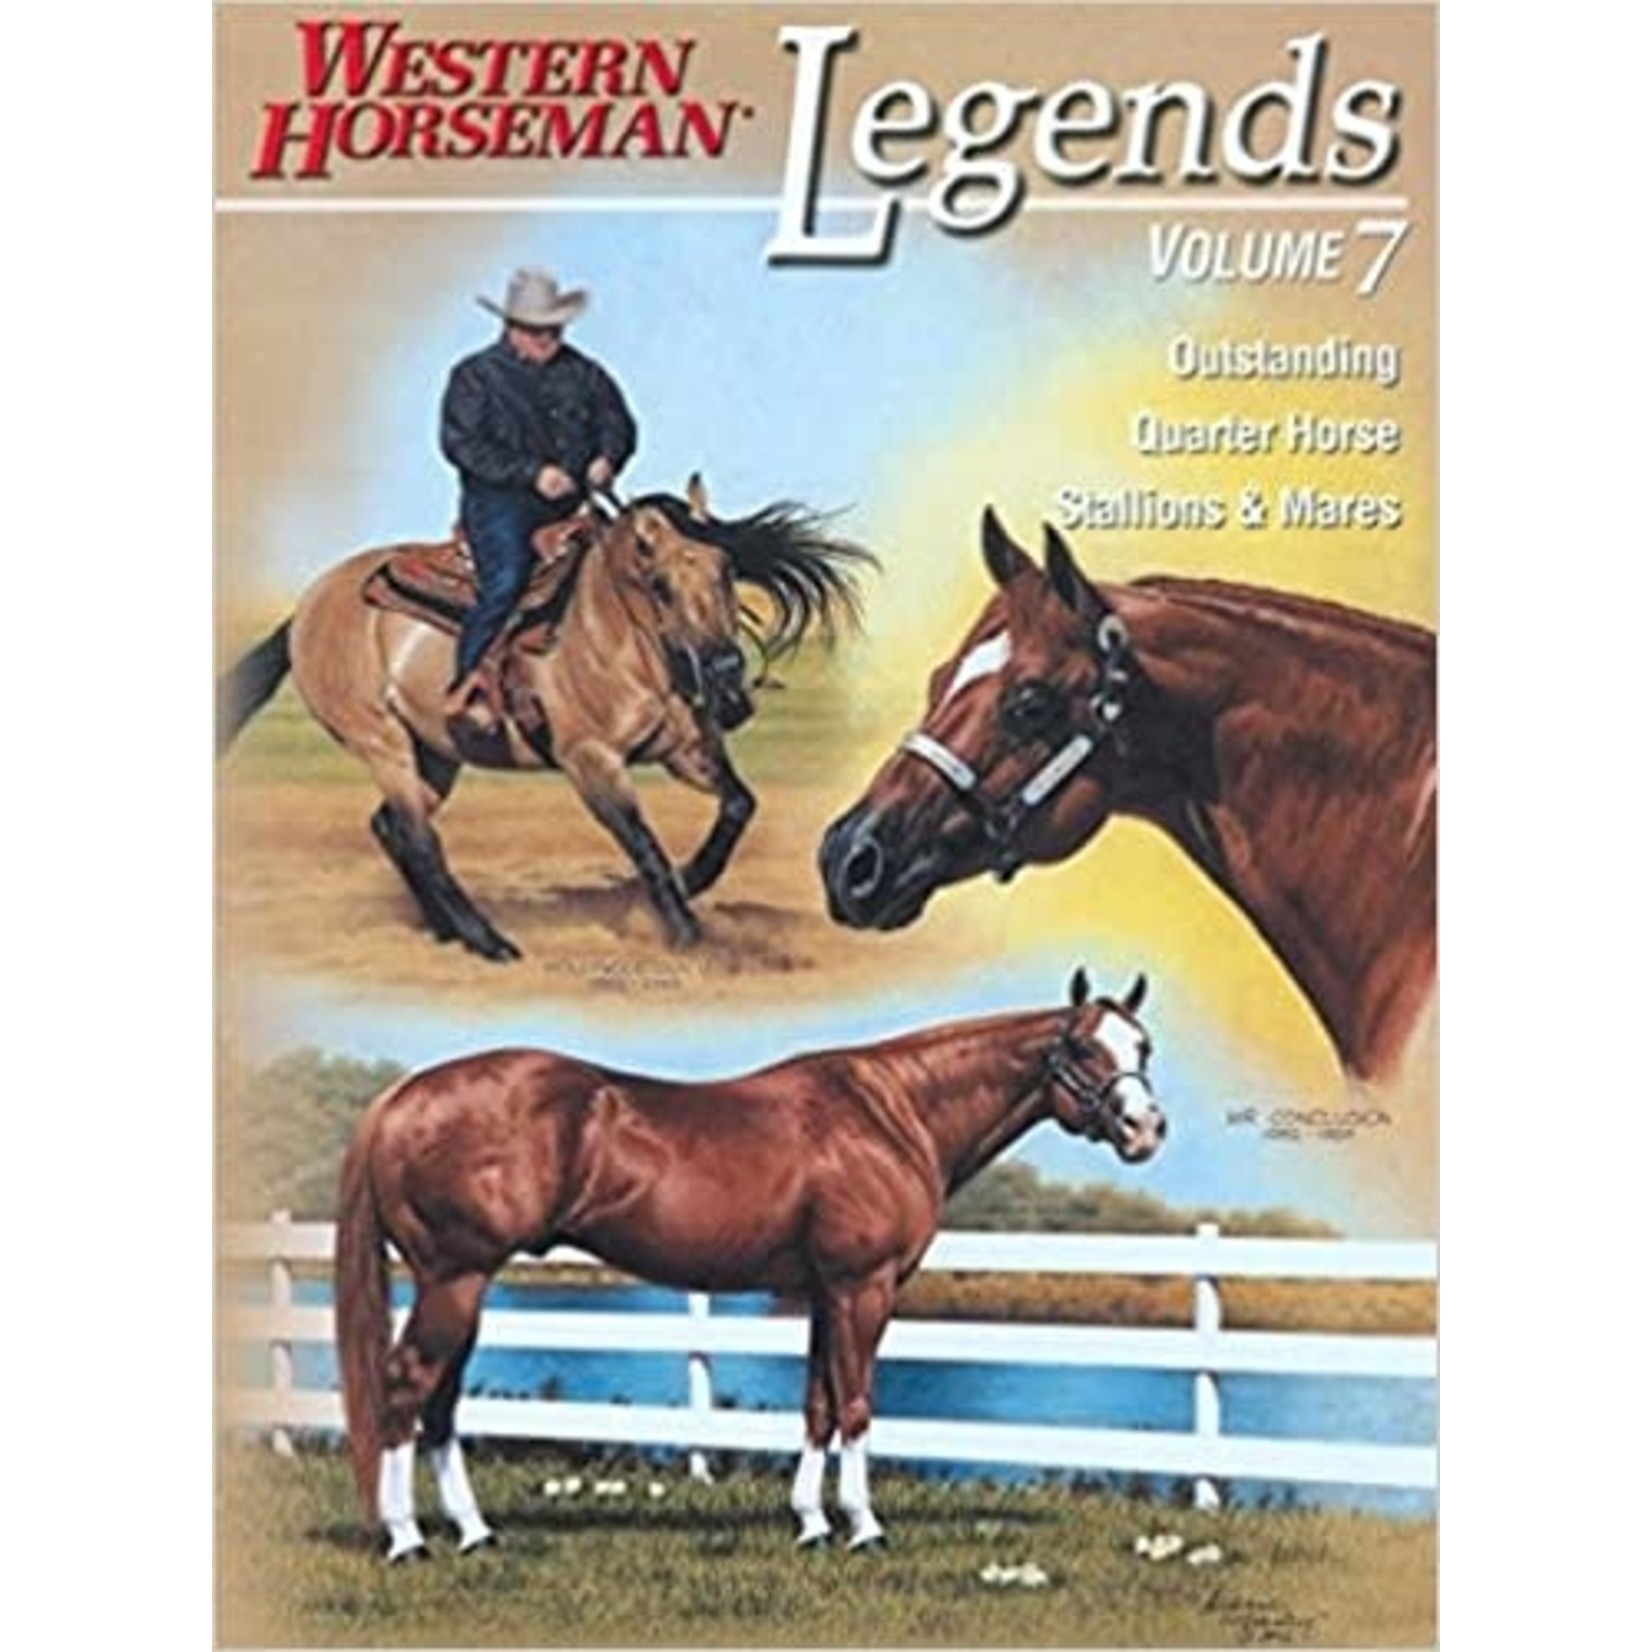 Western Horseman Legends Volume 7